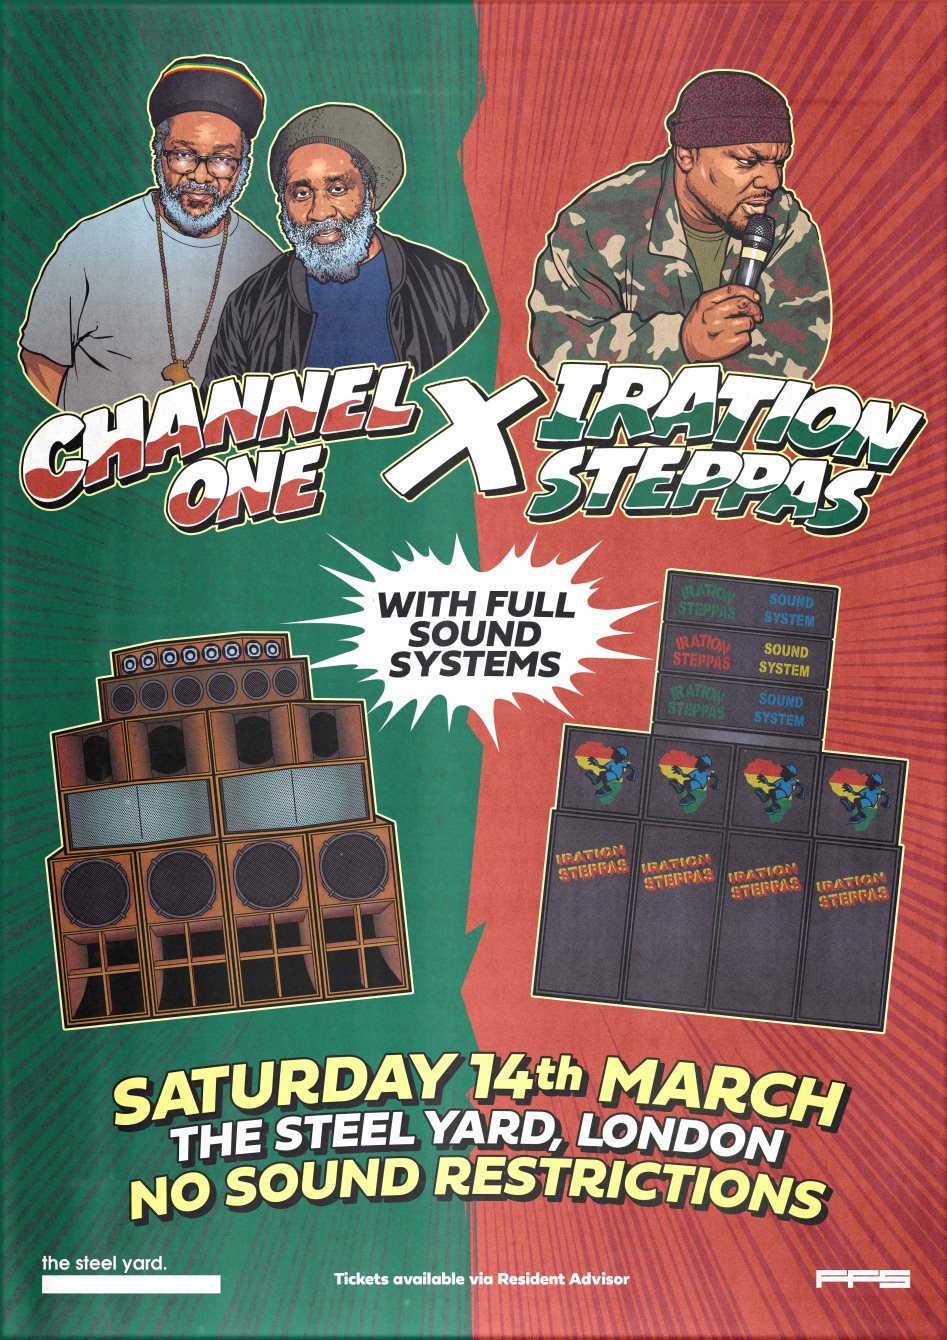 Channel One x Iration Steppas (Full Soundsystems) - Flyer back